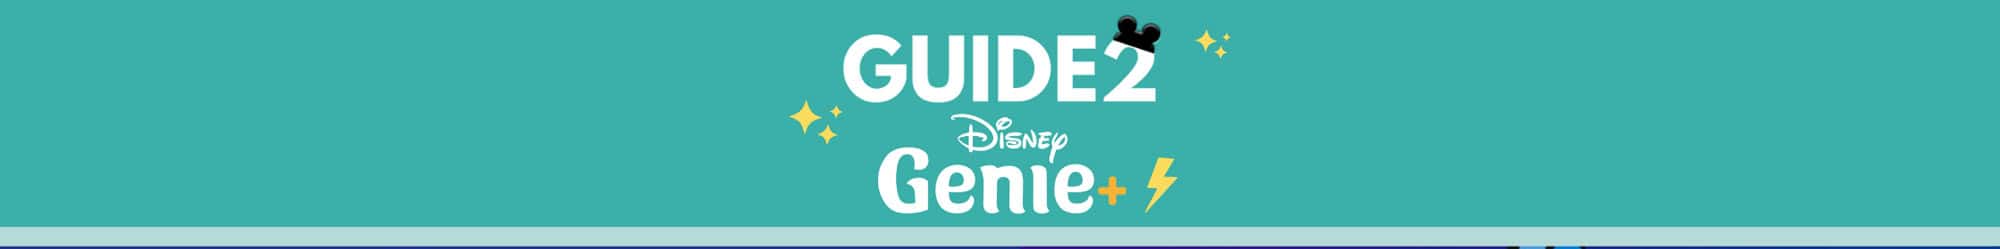 Guide 2 Disney Genie - Guide2WDW Disney World Guide